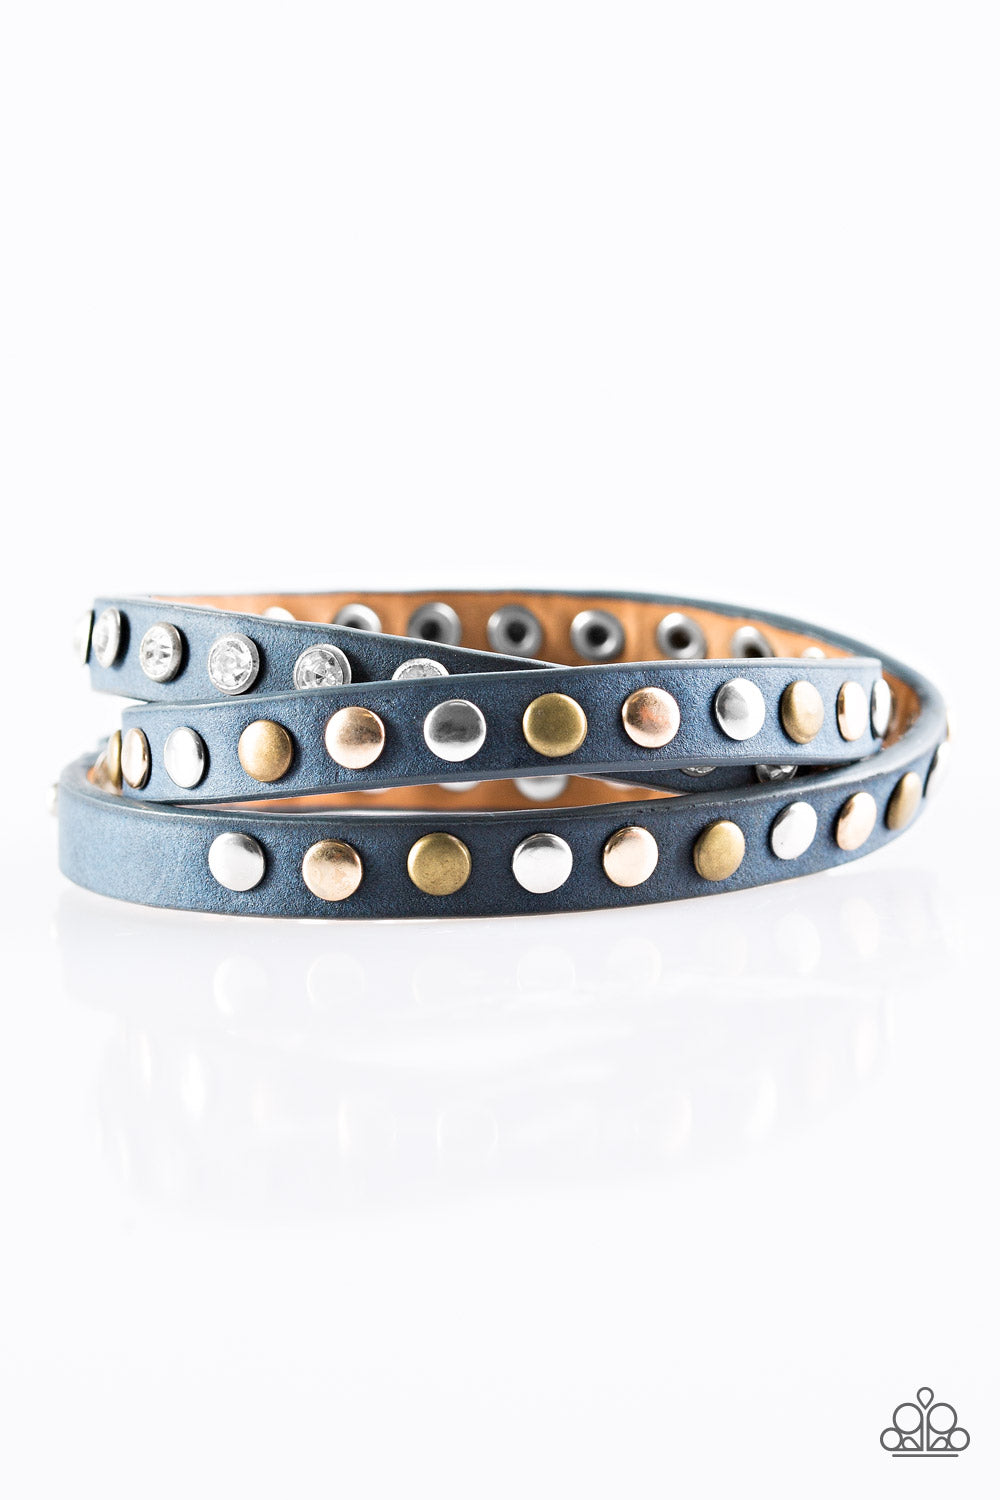 Paparazzi Lets Go For A CATWALK - Blue Leather Wrap Bracelet - $5 Jewelry With Ashley Swint